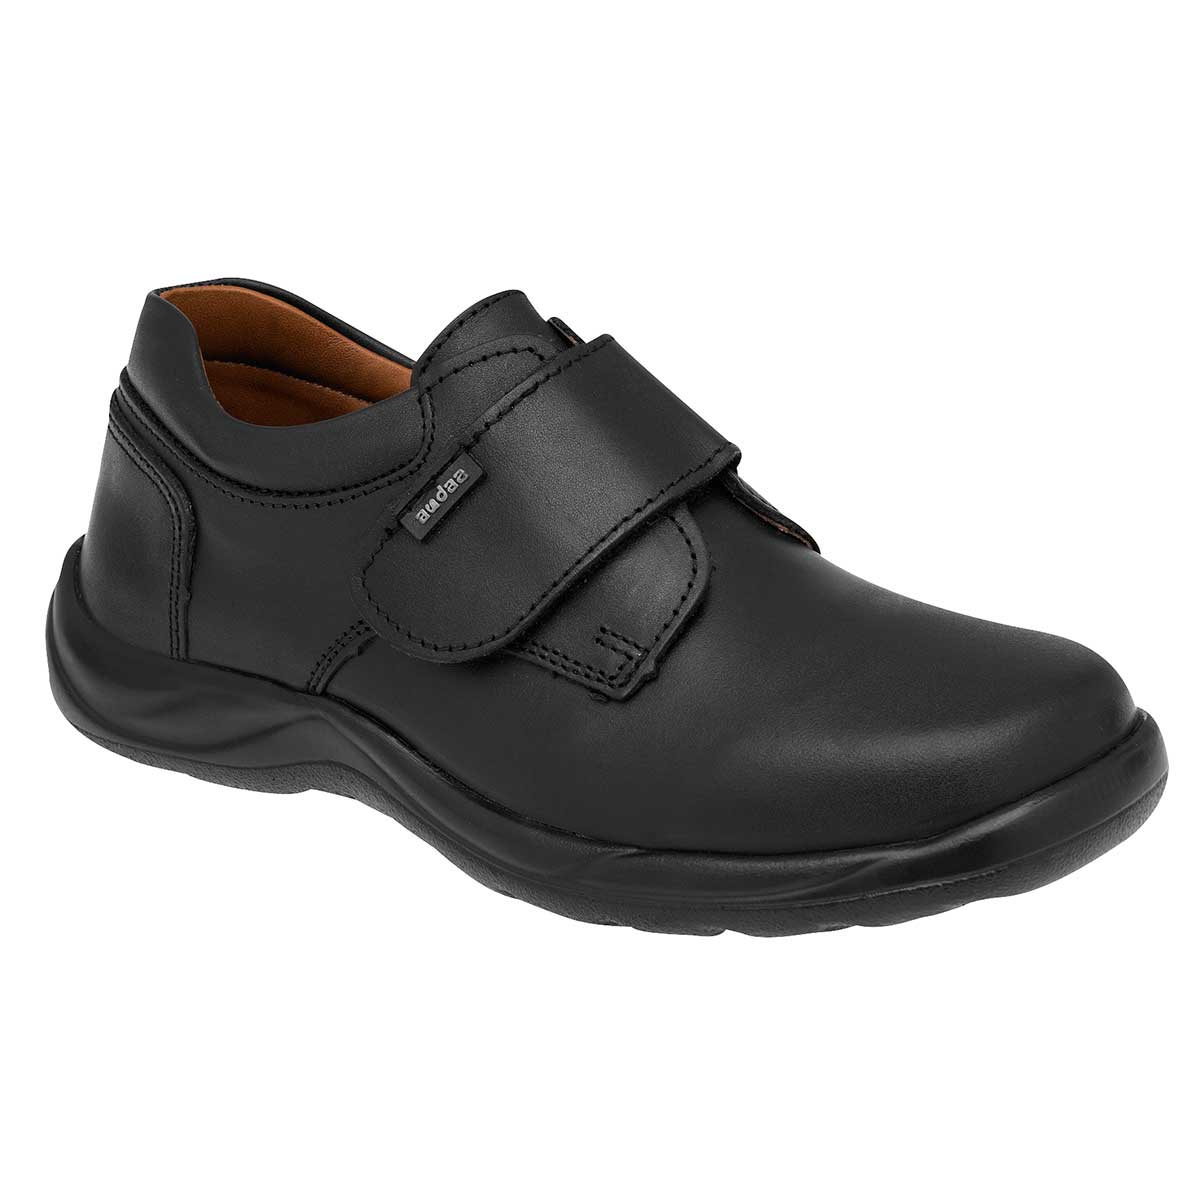 Pakar.com - Mayo: Regalos para mamá | Zapato casual para niño cod-41854